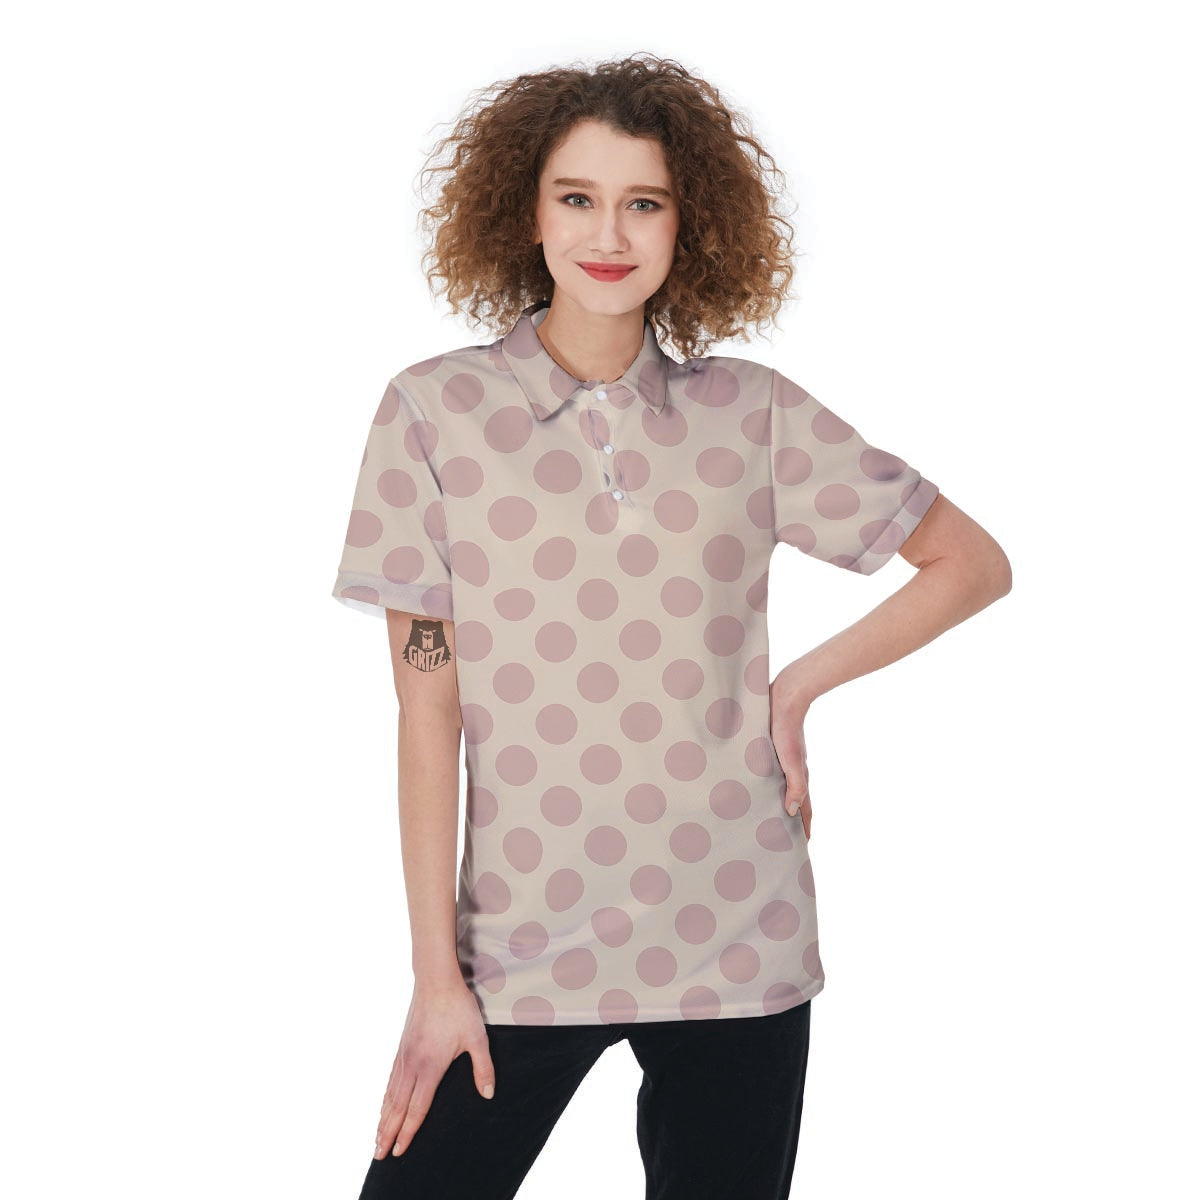 Brown And Cream Polka Dot Women’s Golf Shirts